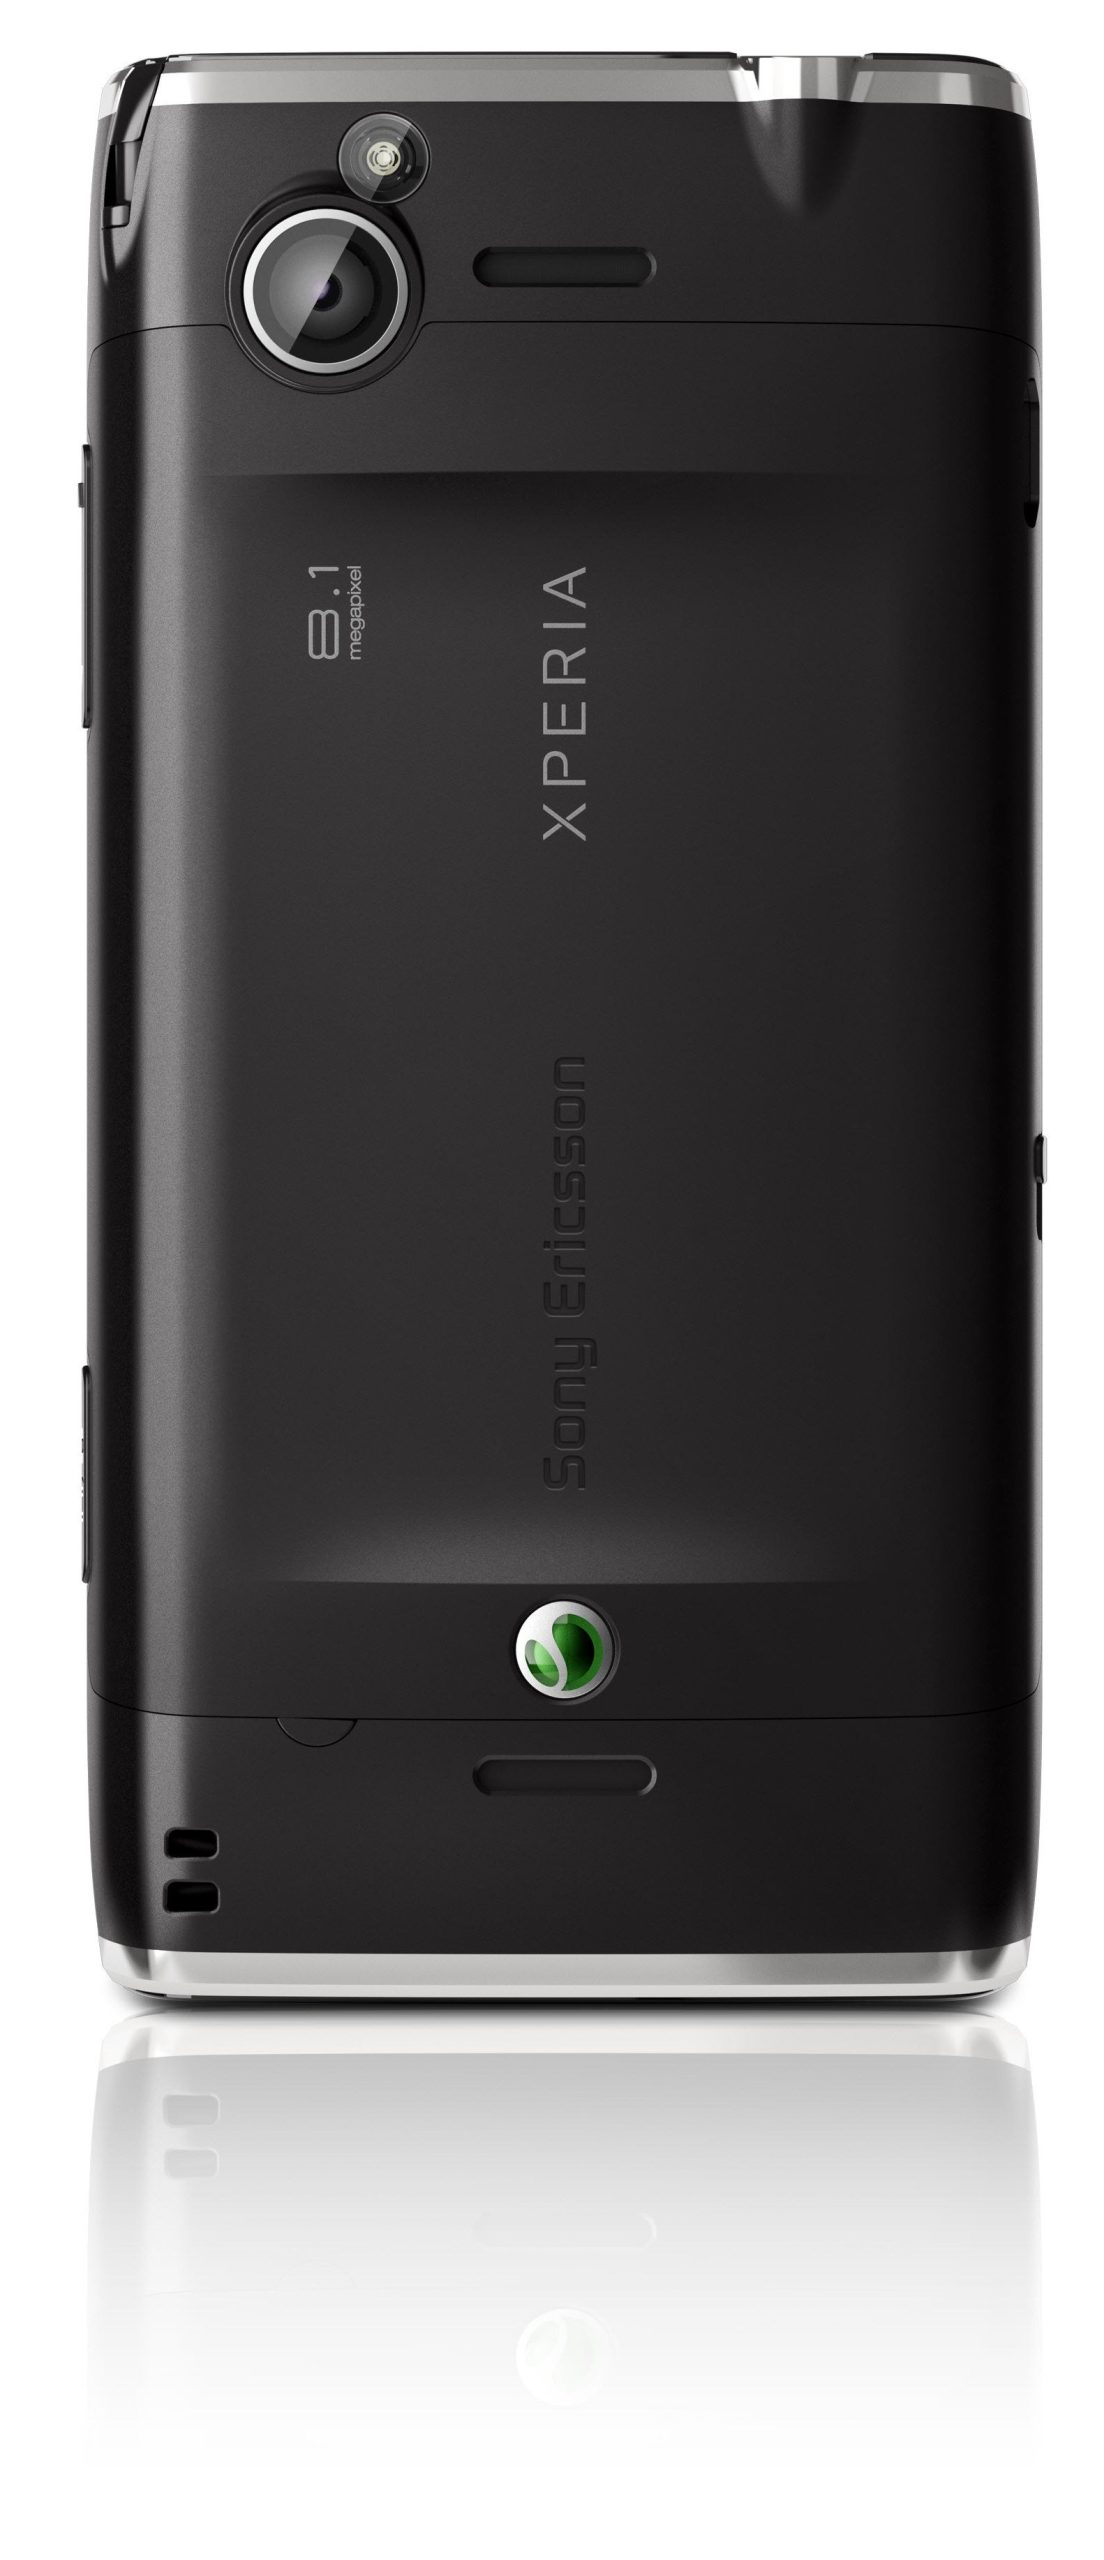 You are currently viewing Лучший способ решить антивирусную программу Sony Ericsson Xperia X2 Скачать бесплатно